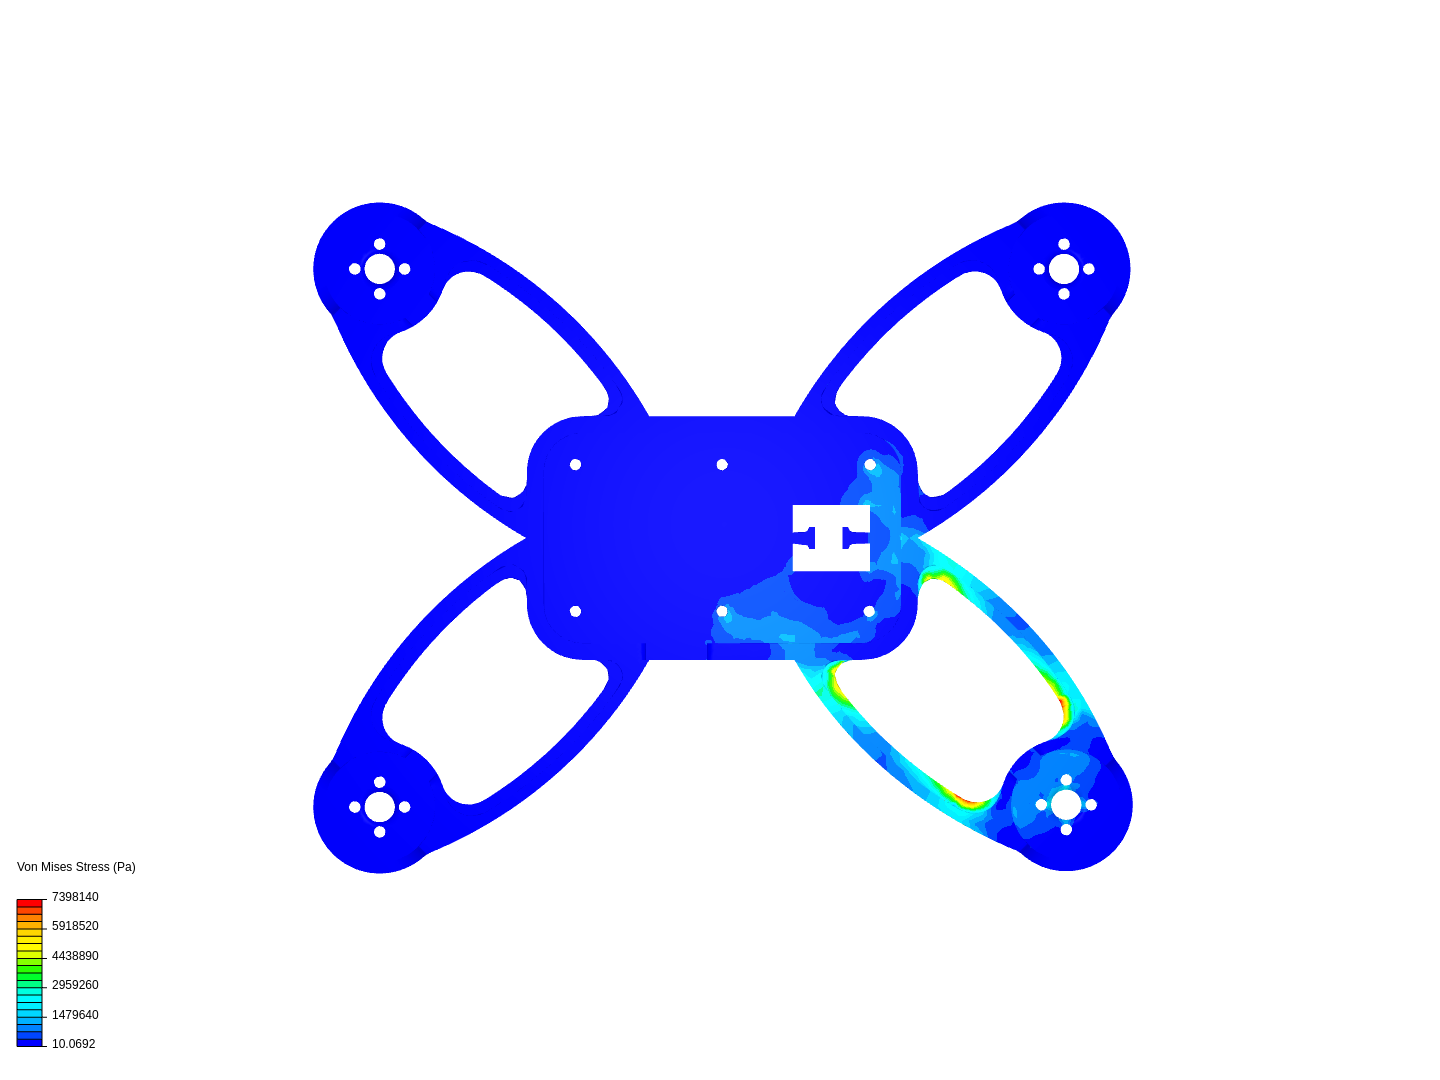 Drone v2 image